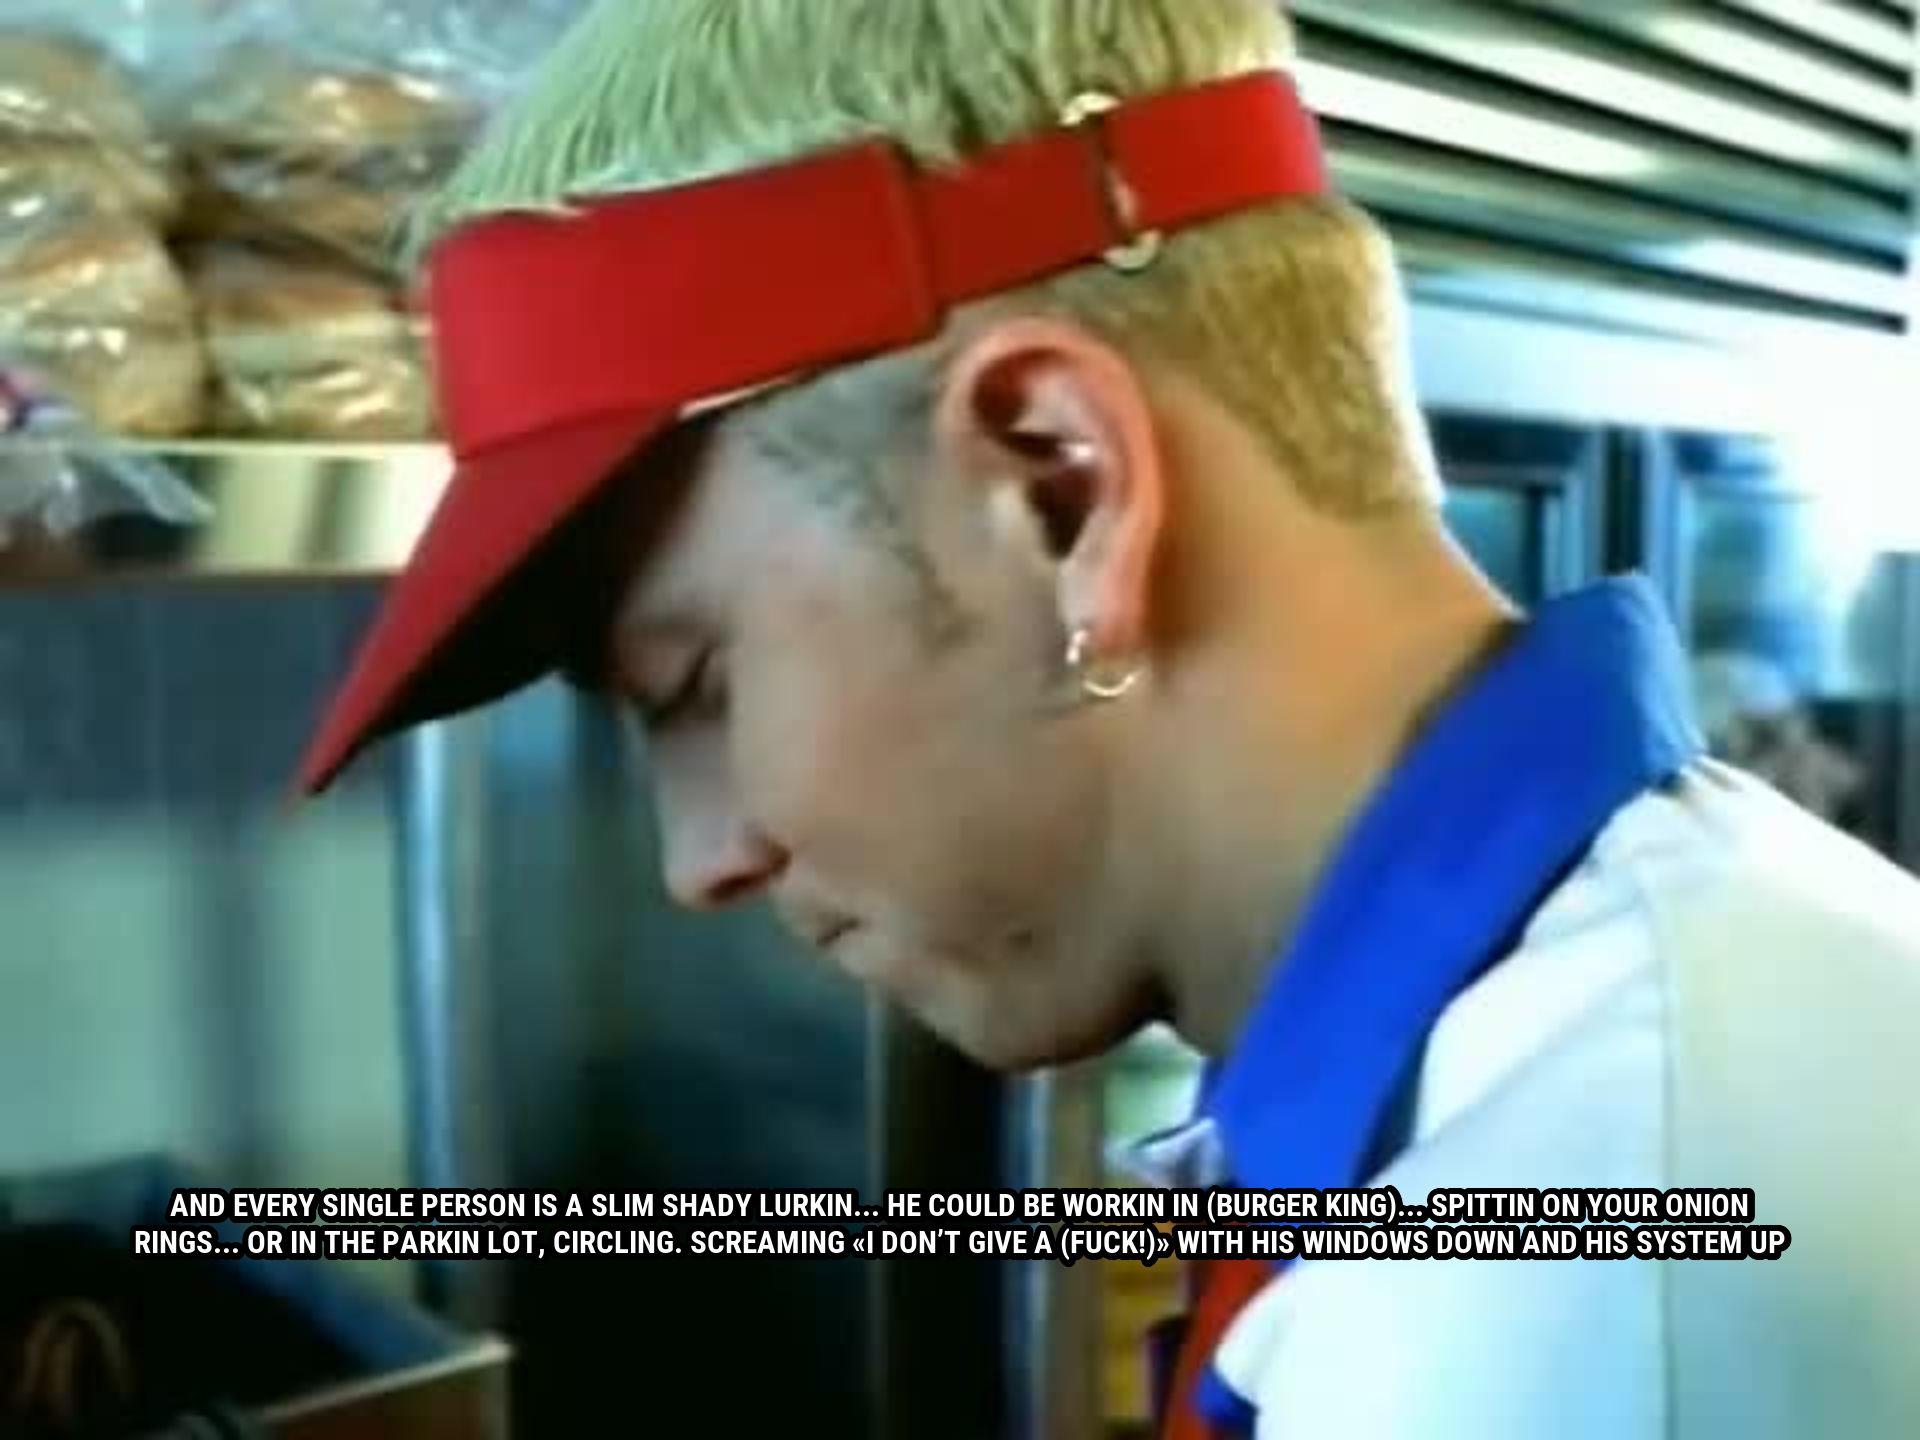 The Real Slim Shady (Edited) lyrics Eminem song in image